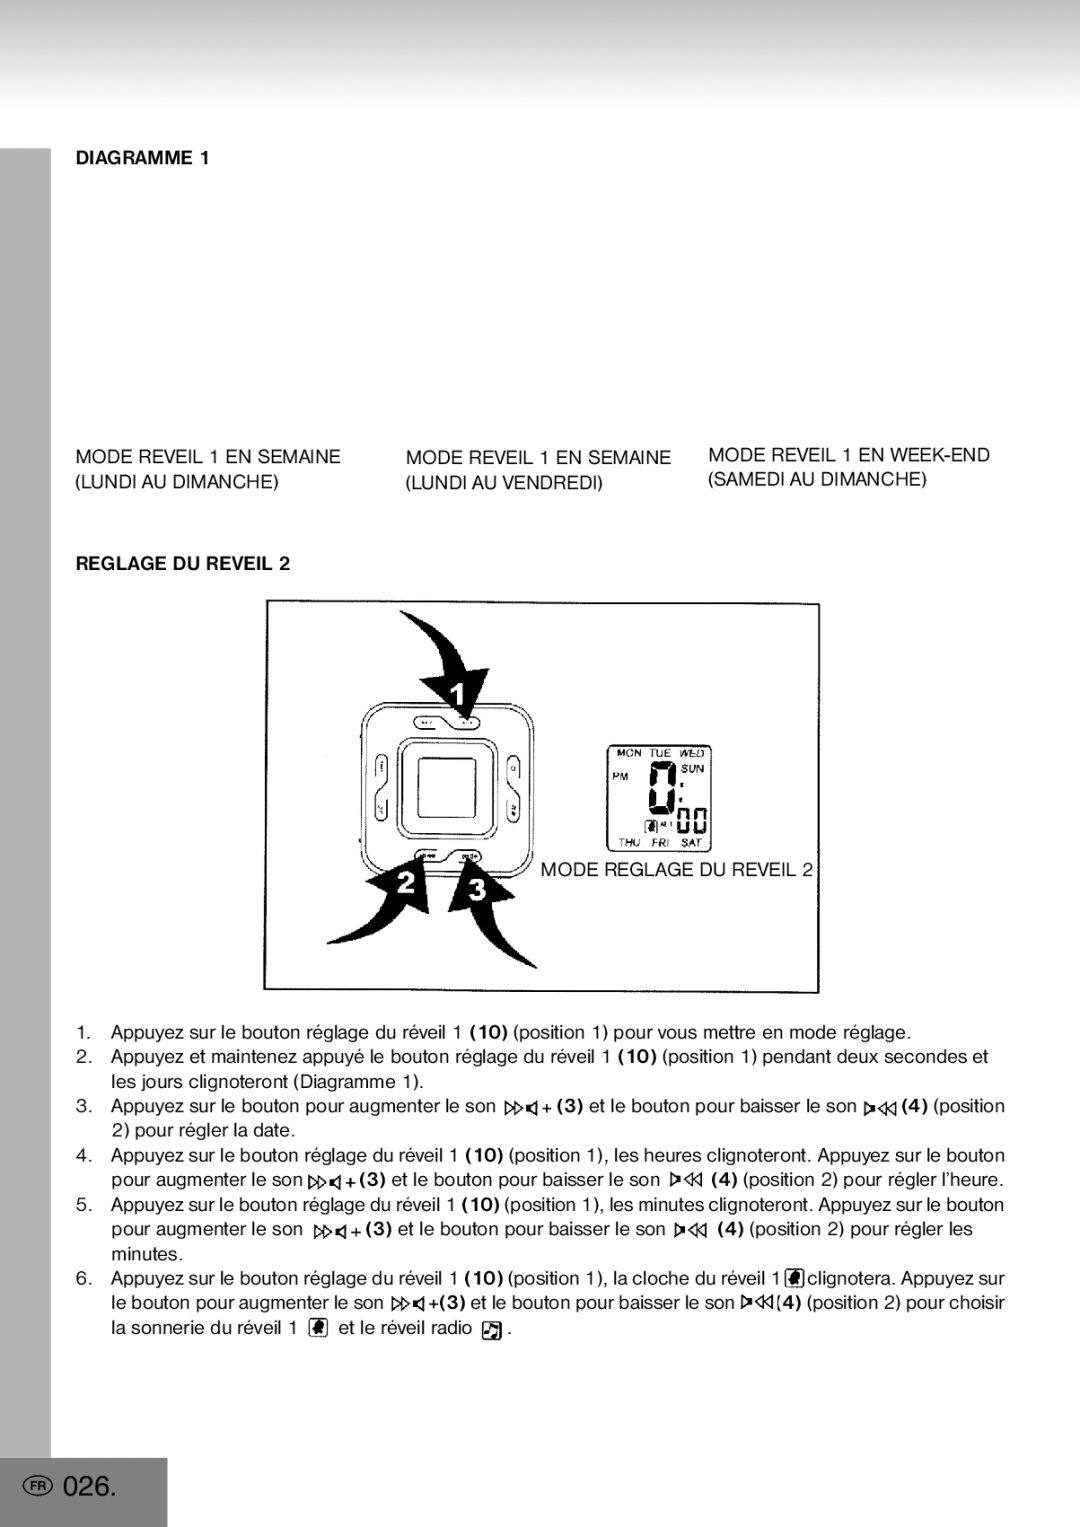 Elta 4556 manual 026, Diagramme, Mode Reglage DU Reveil 